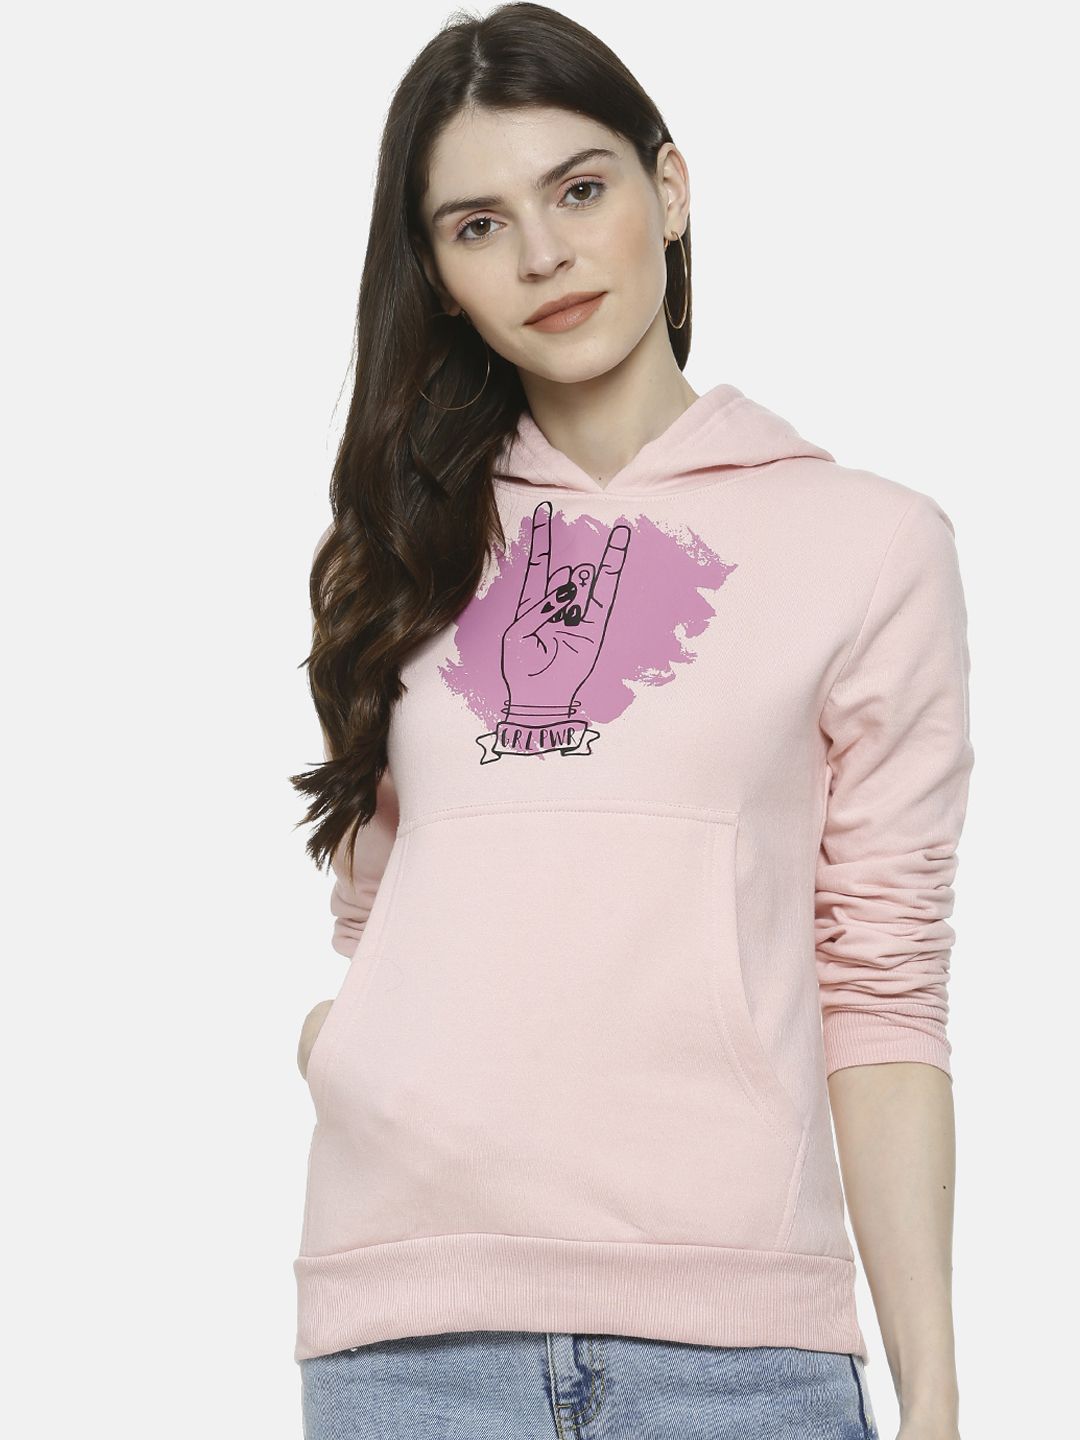 Campus Sutra Women Pink Printed Hooded Sweatshirt Price in India